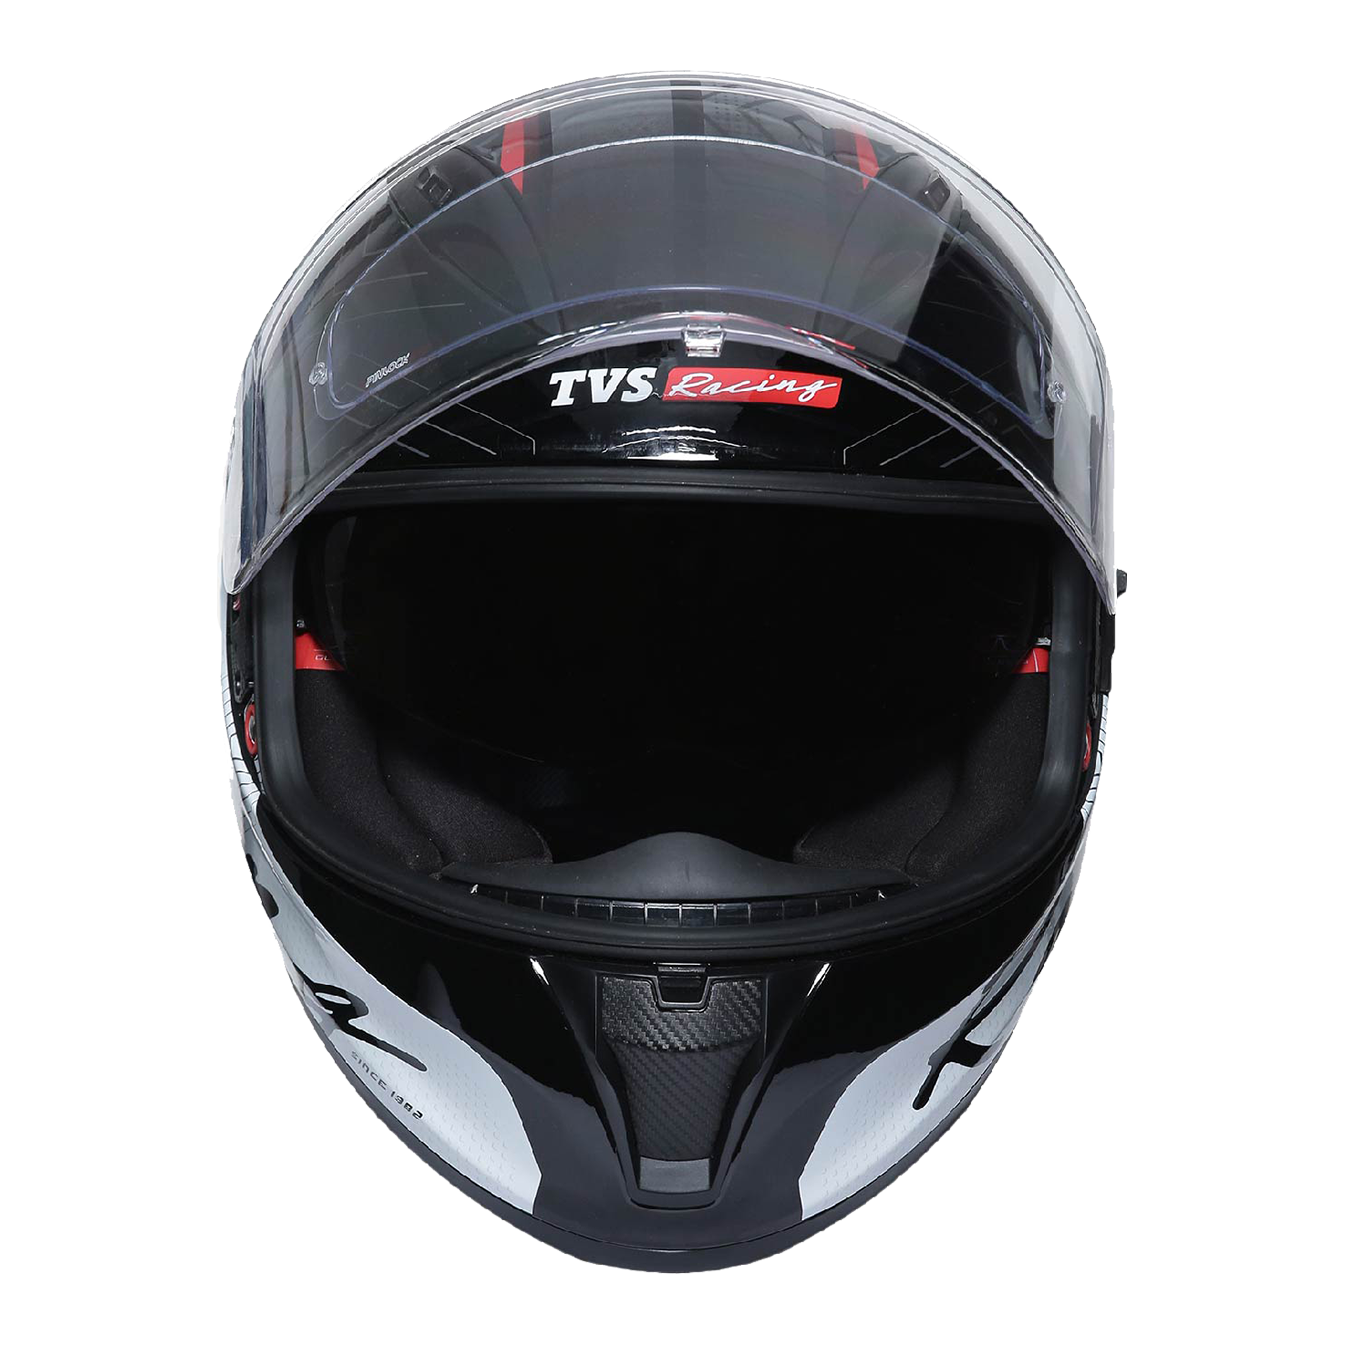  TVS Racing Helmet for Men – Anti-Fog Pin-Lock, Aerodynamic Design & DOT/ISI/ECE Certified – Premium Bike Helmet with Secure Fastening (Blue & Neon)